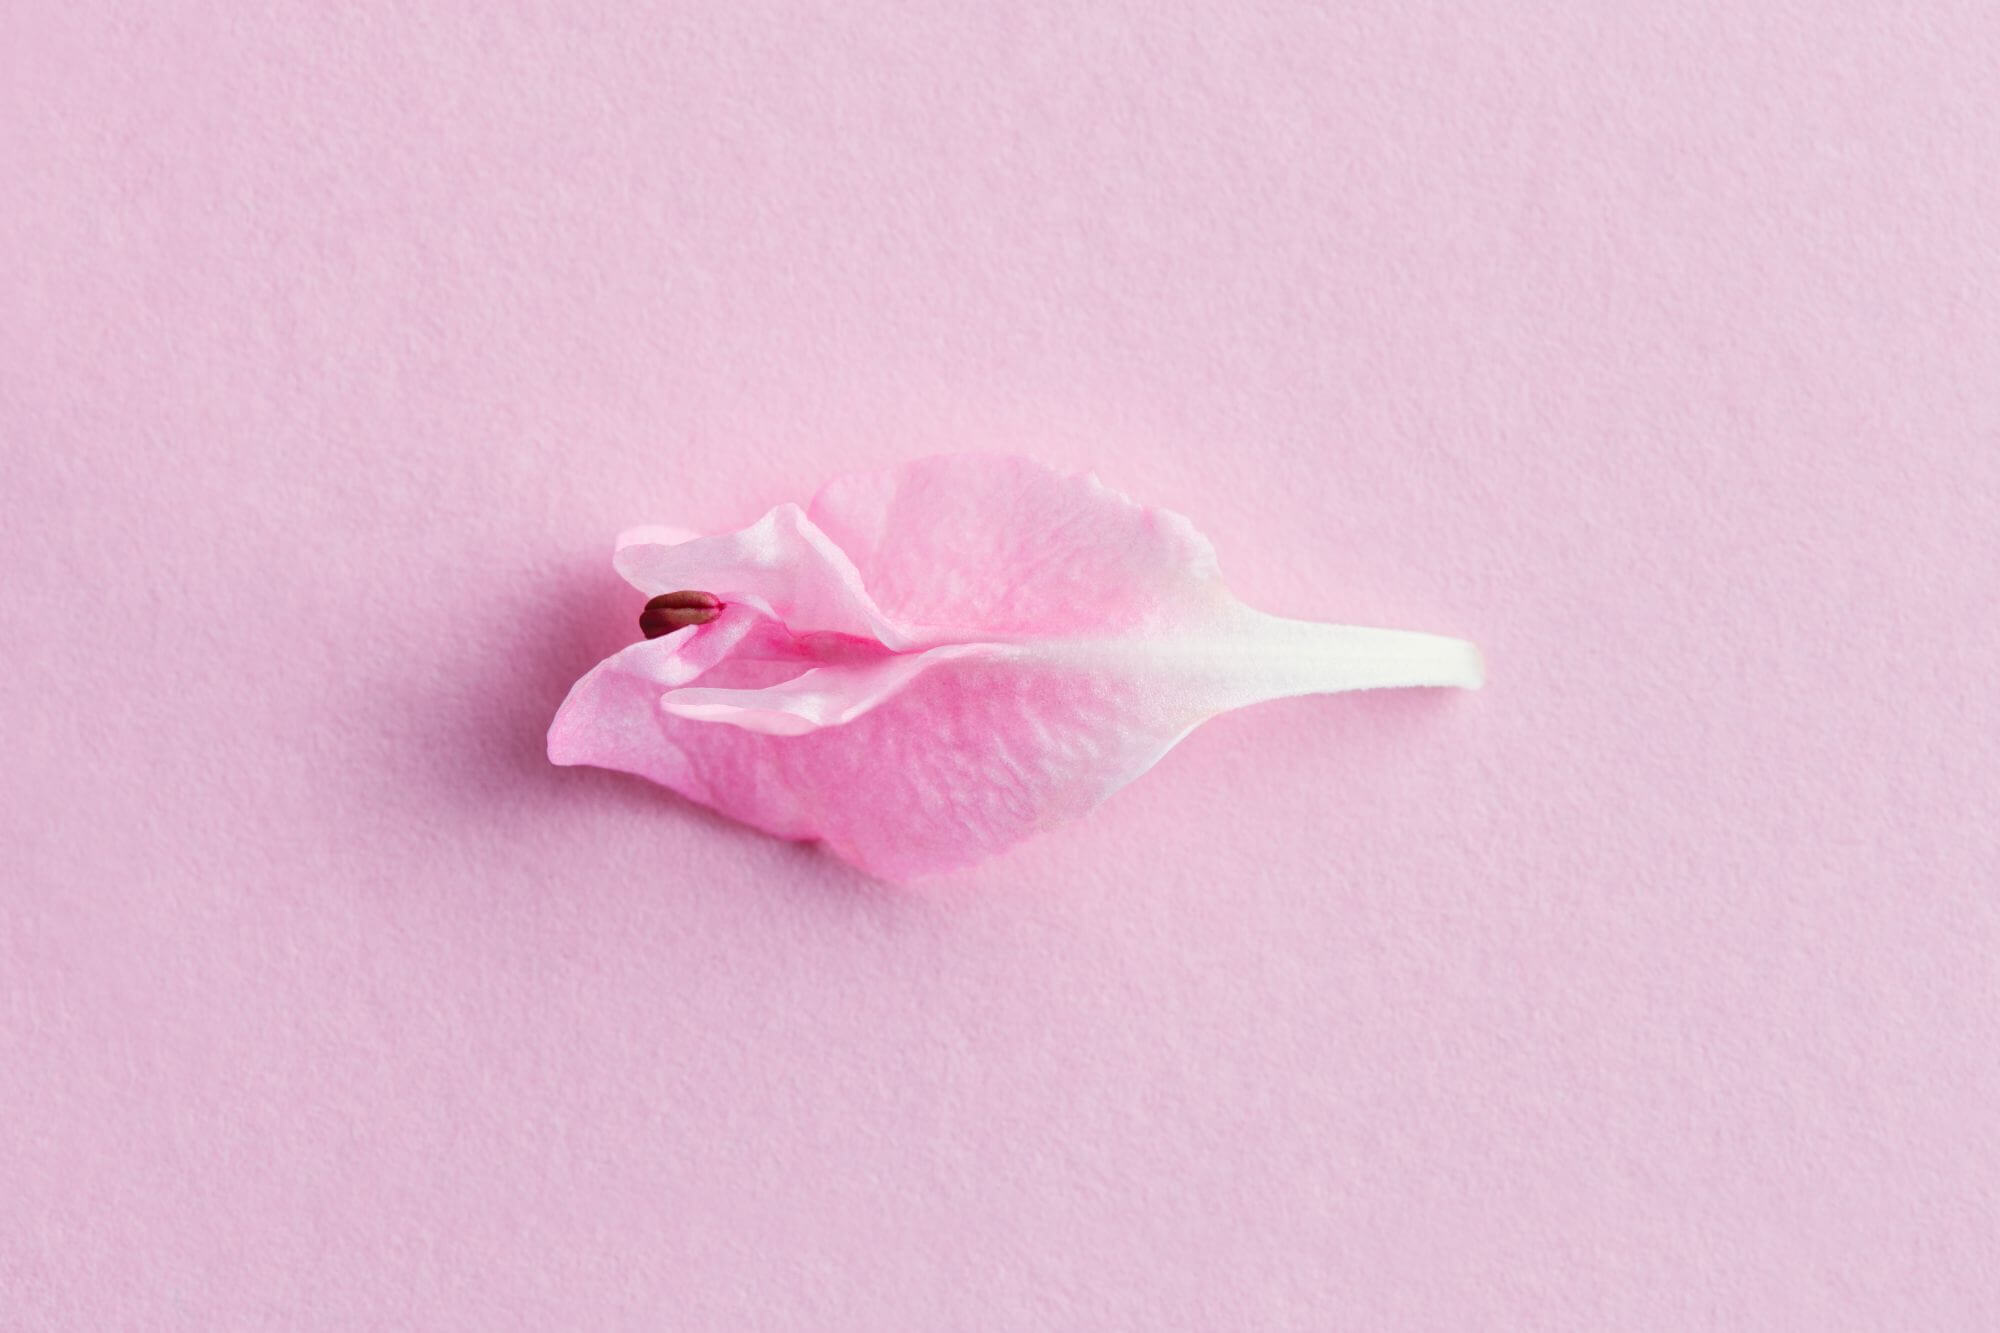 Image of a flower petal.